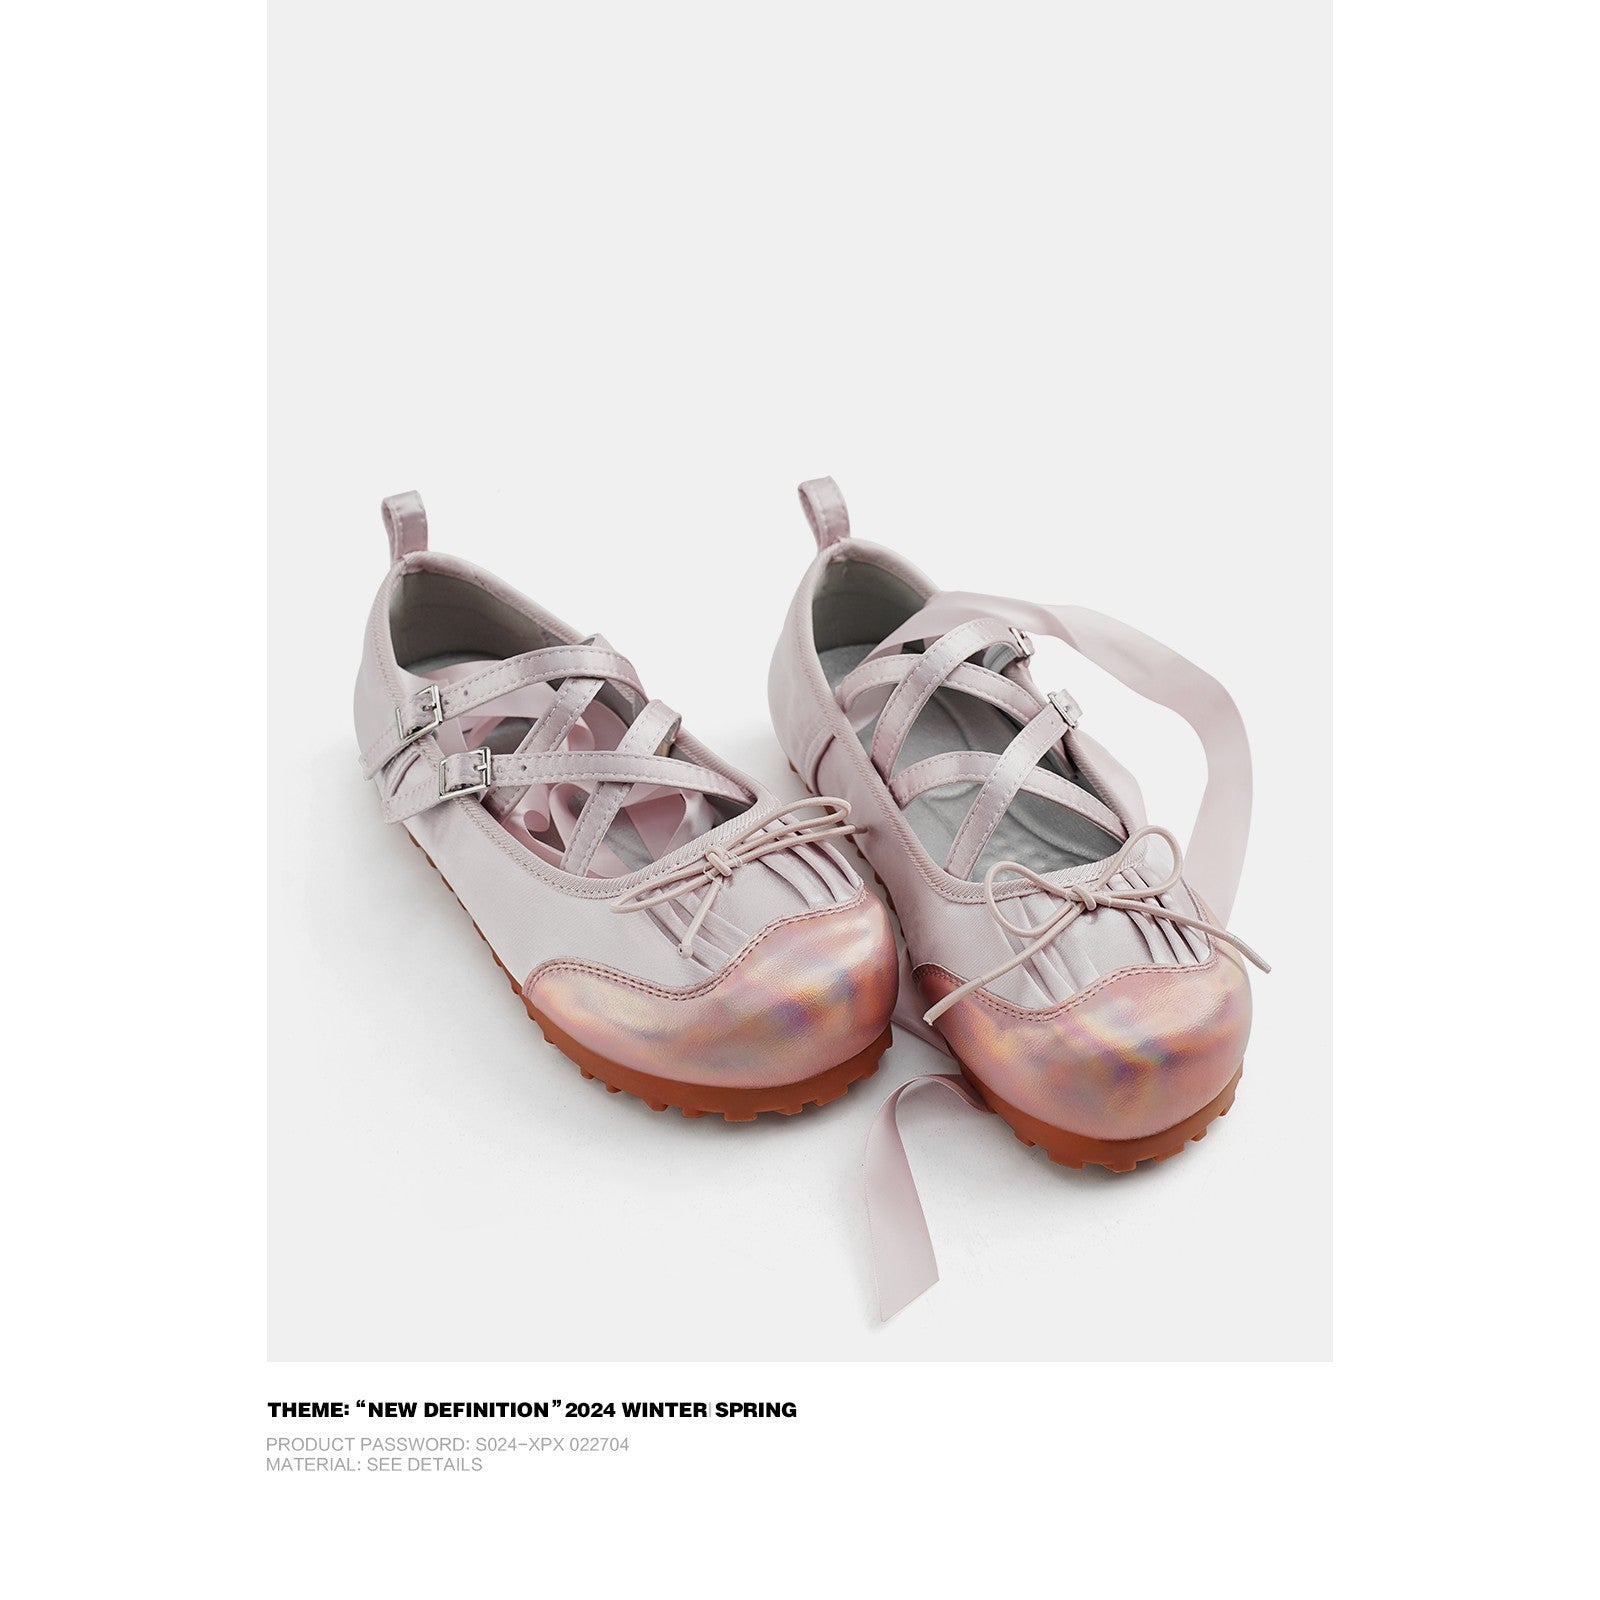 French Ballet Slipper Women's Flat Fashion Shoes